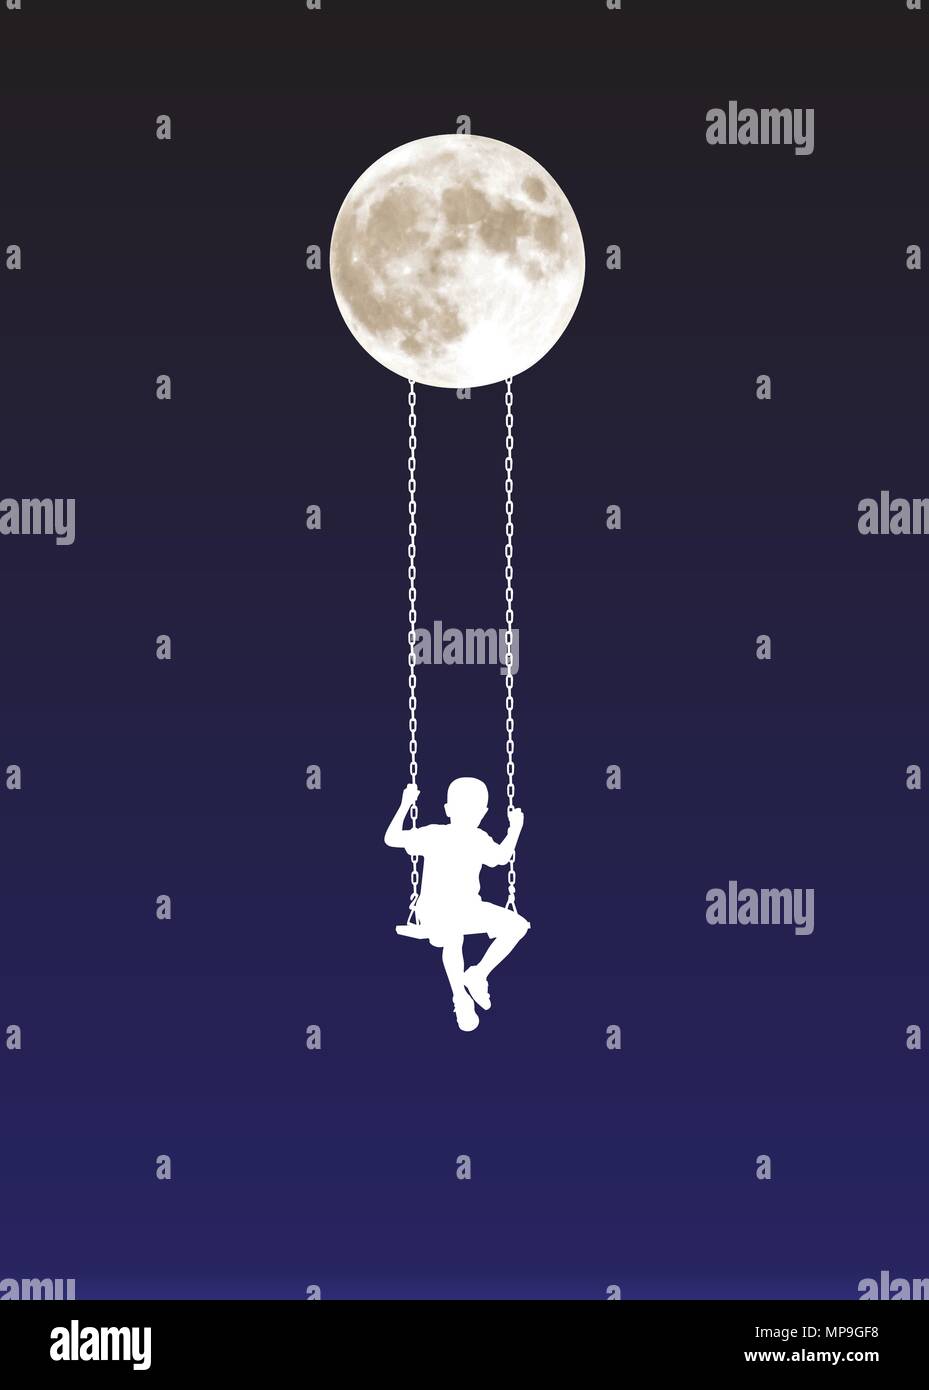 Junge auf der Schaukel im Moonlight Vector Illustration Stock Vektor